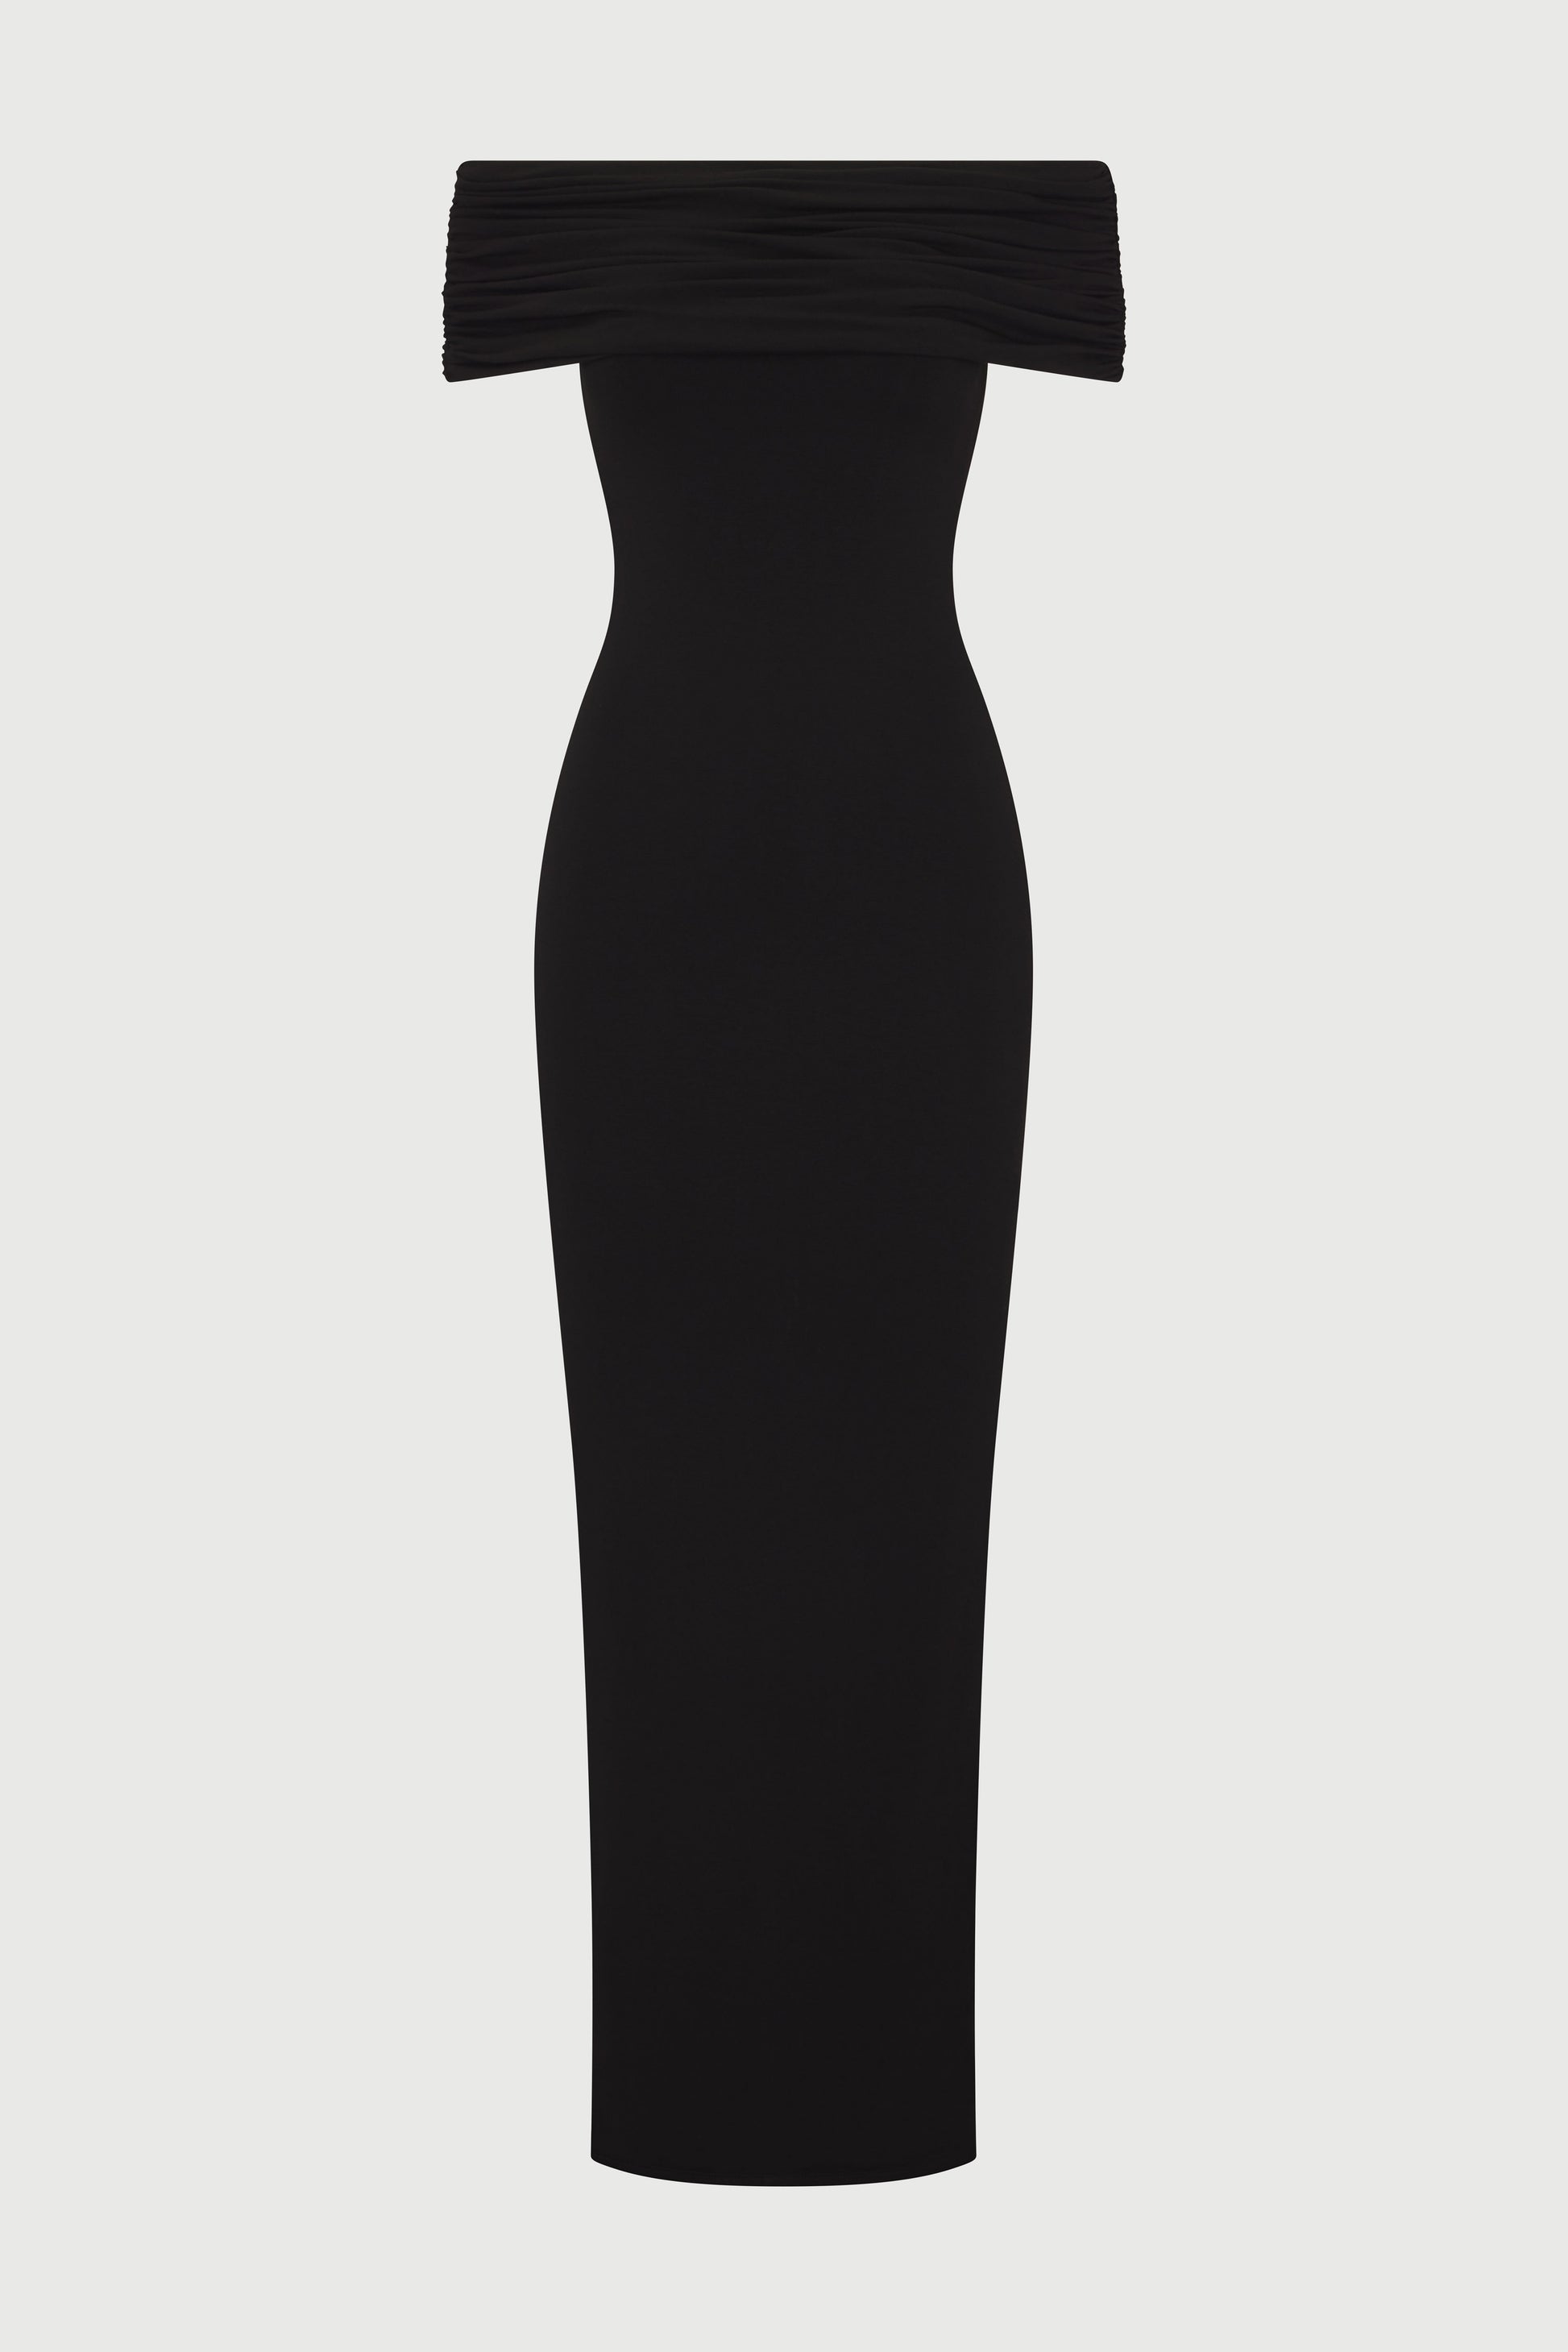 black off-the-shoulder maxi dress on white background